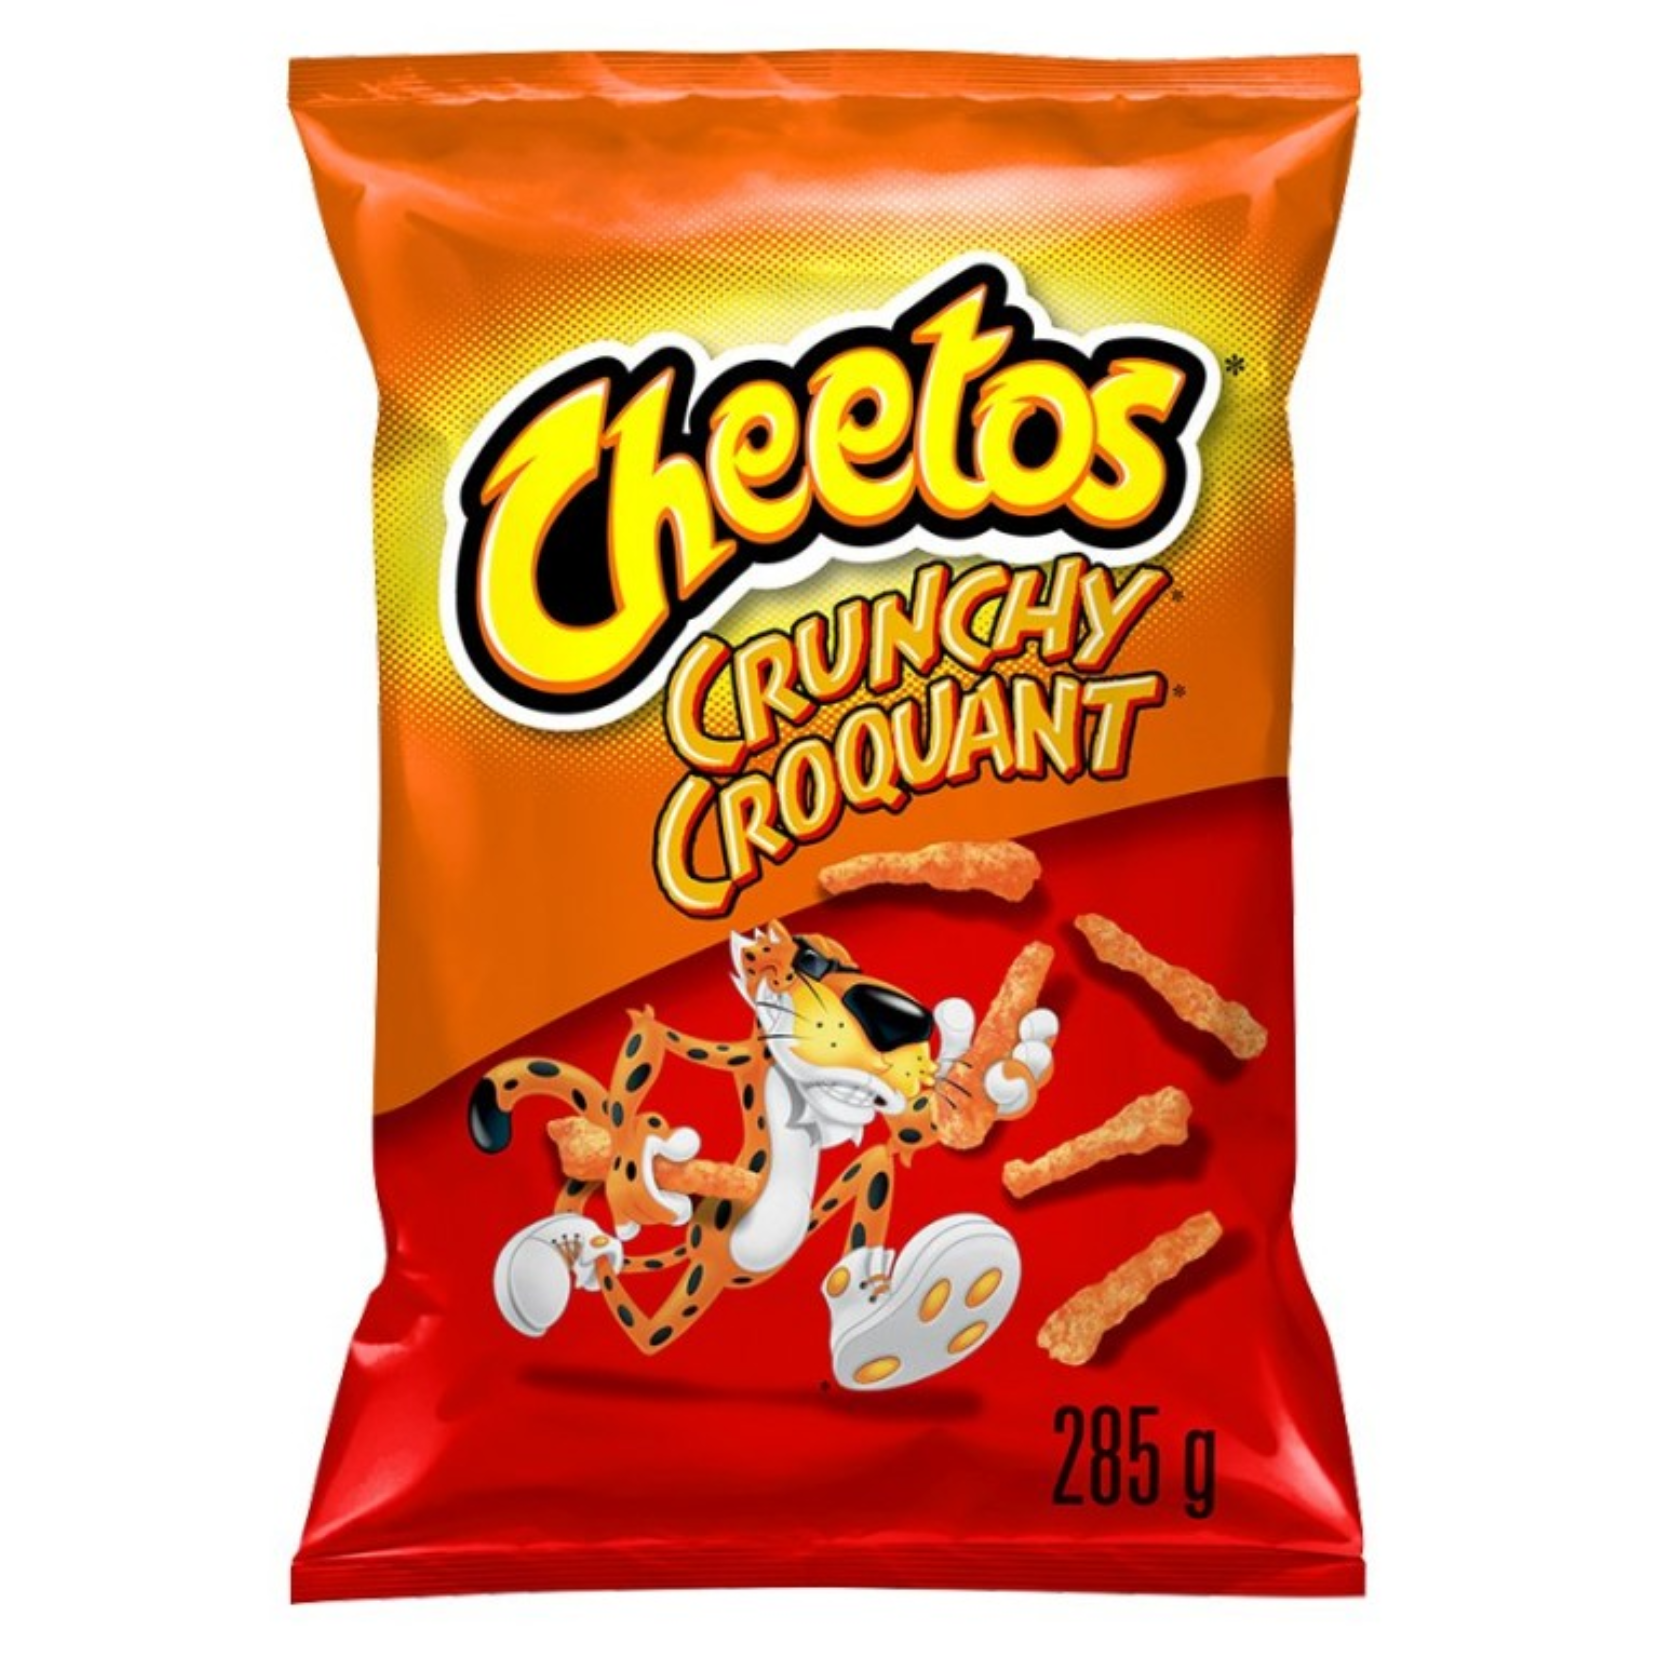 Cheetos Crunchy Cheese Flavored Snacks 285g